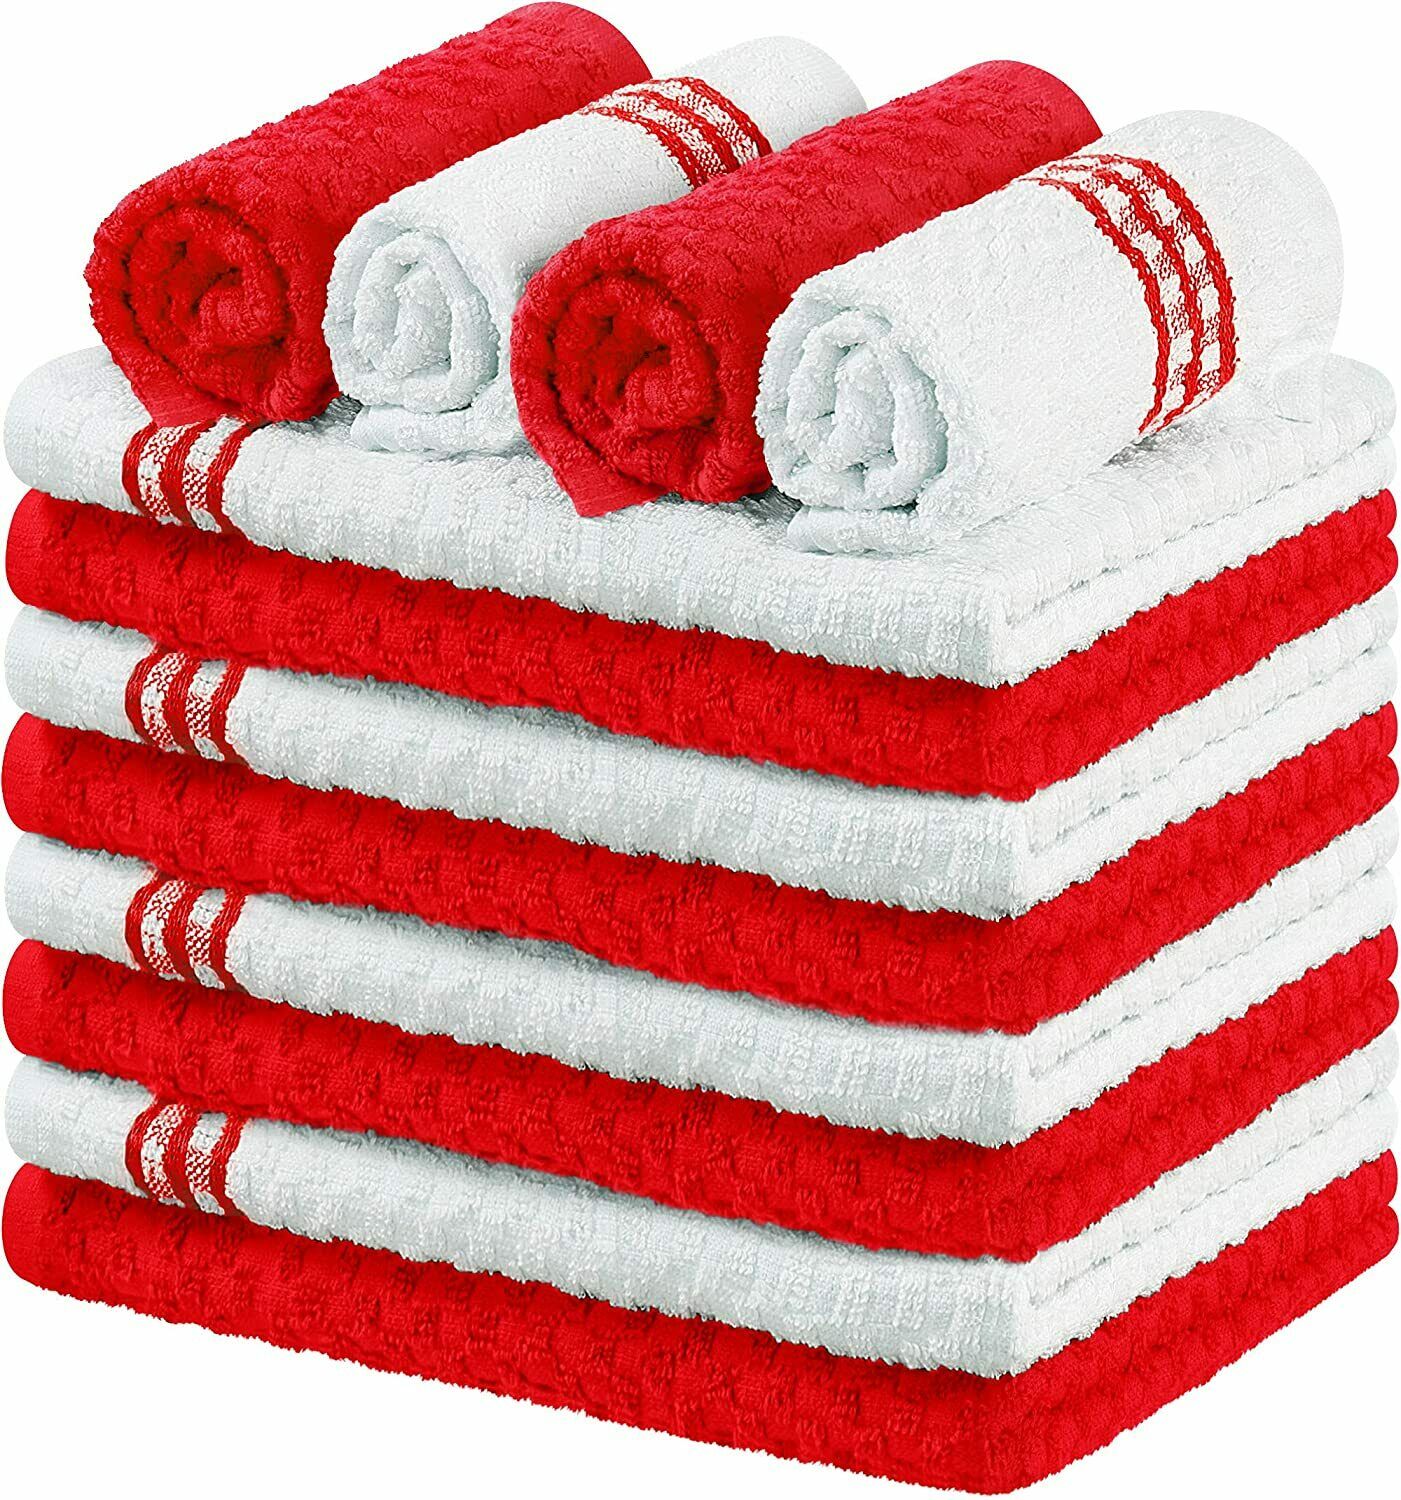 Utopia Towels 12 Kitchen Hand Towels 15x25 " 100% Cotton Super Soft Dish Towels